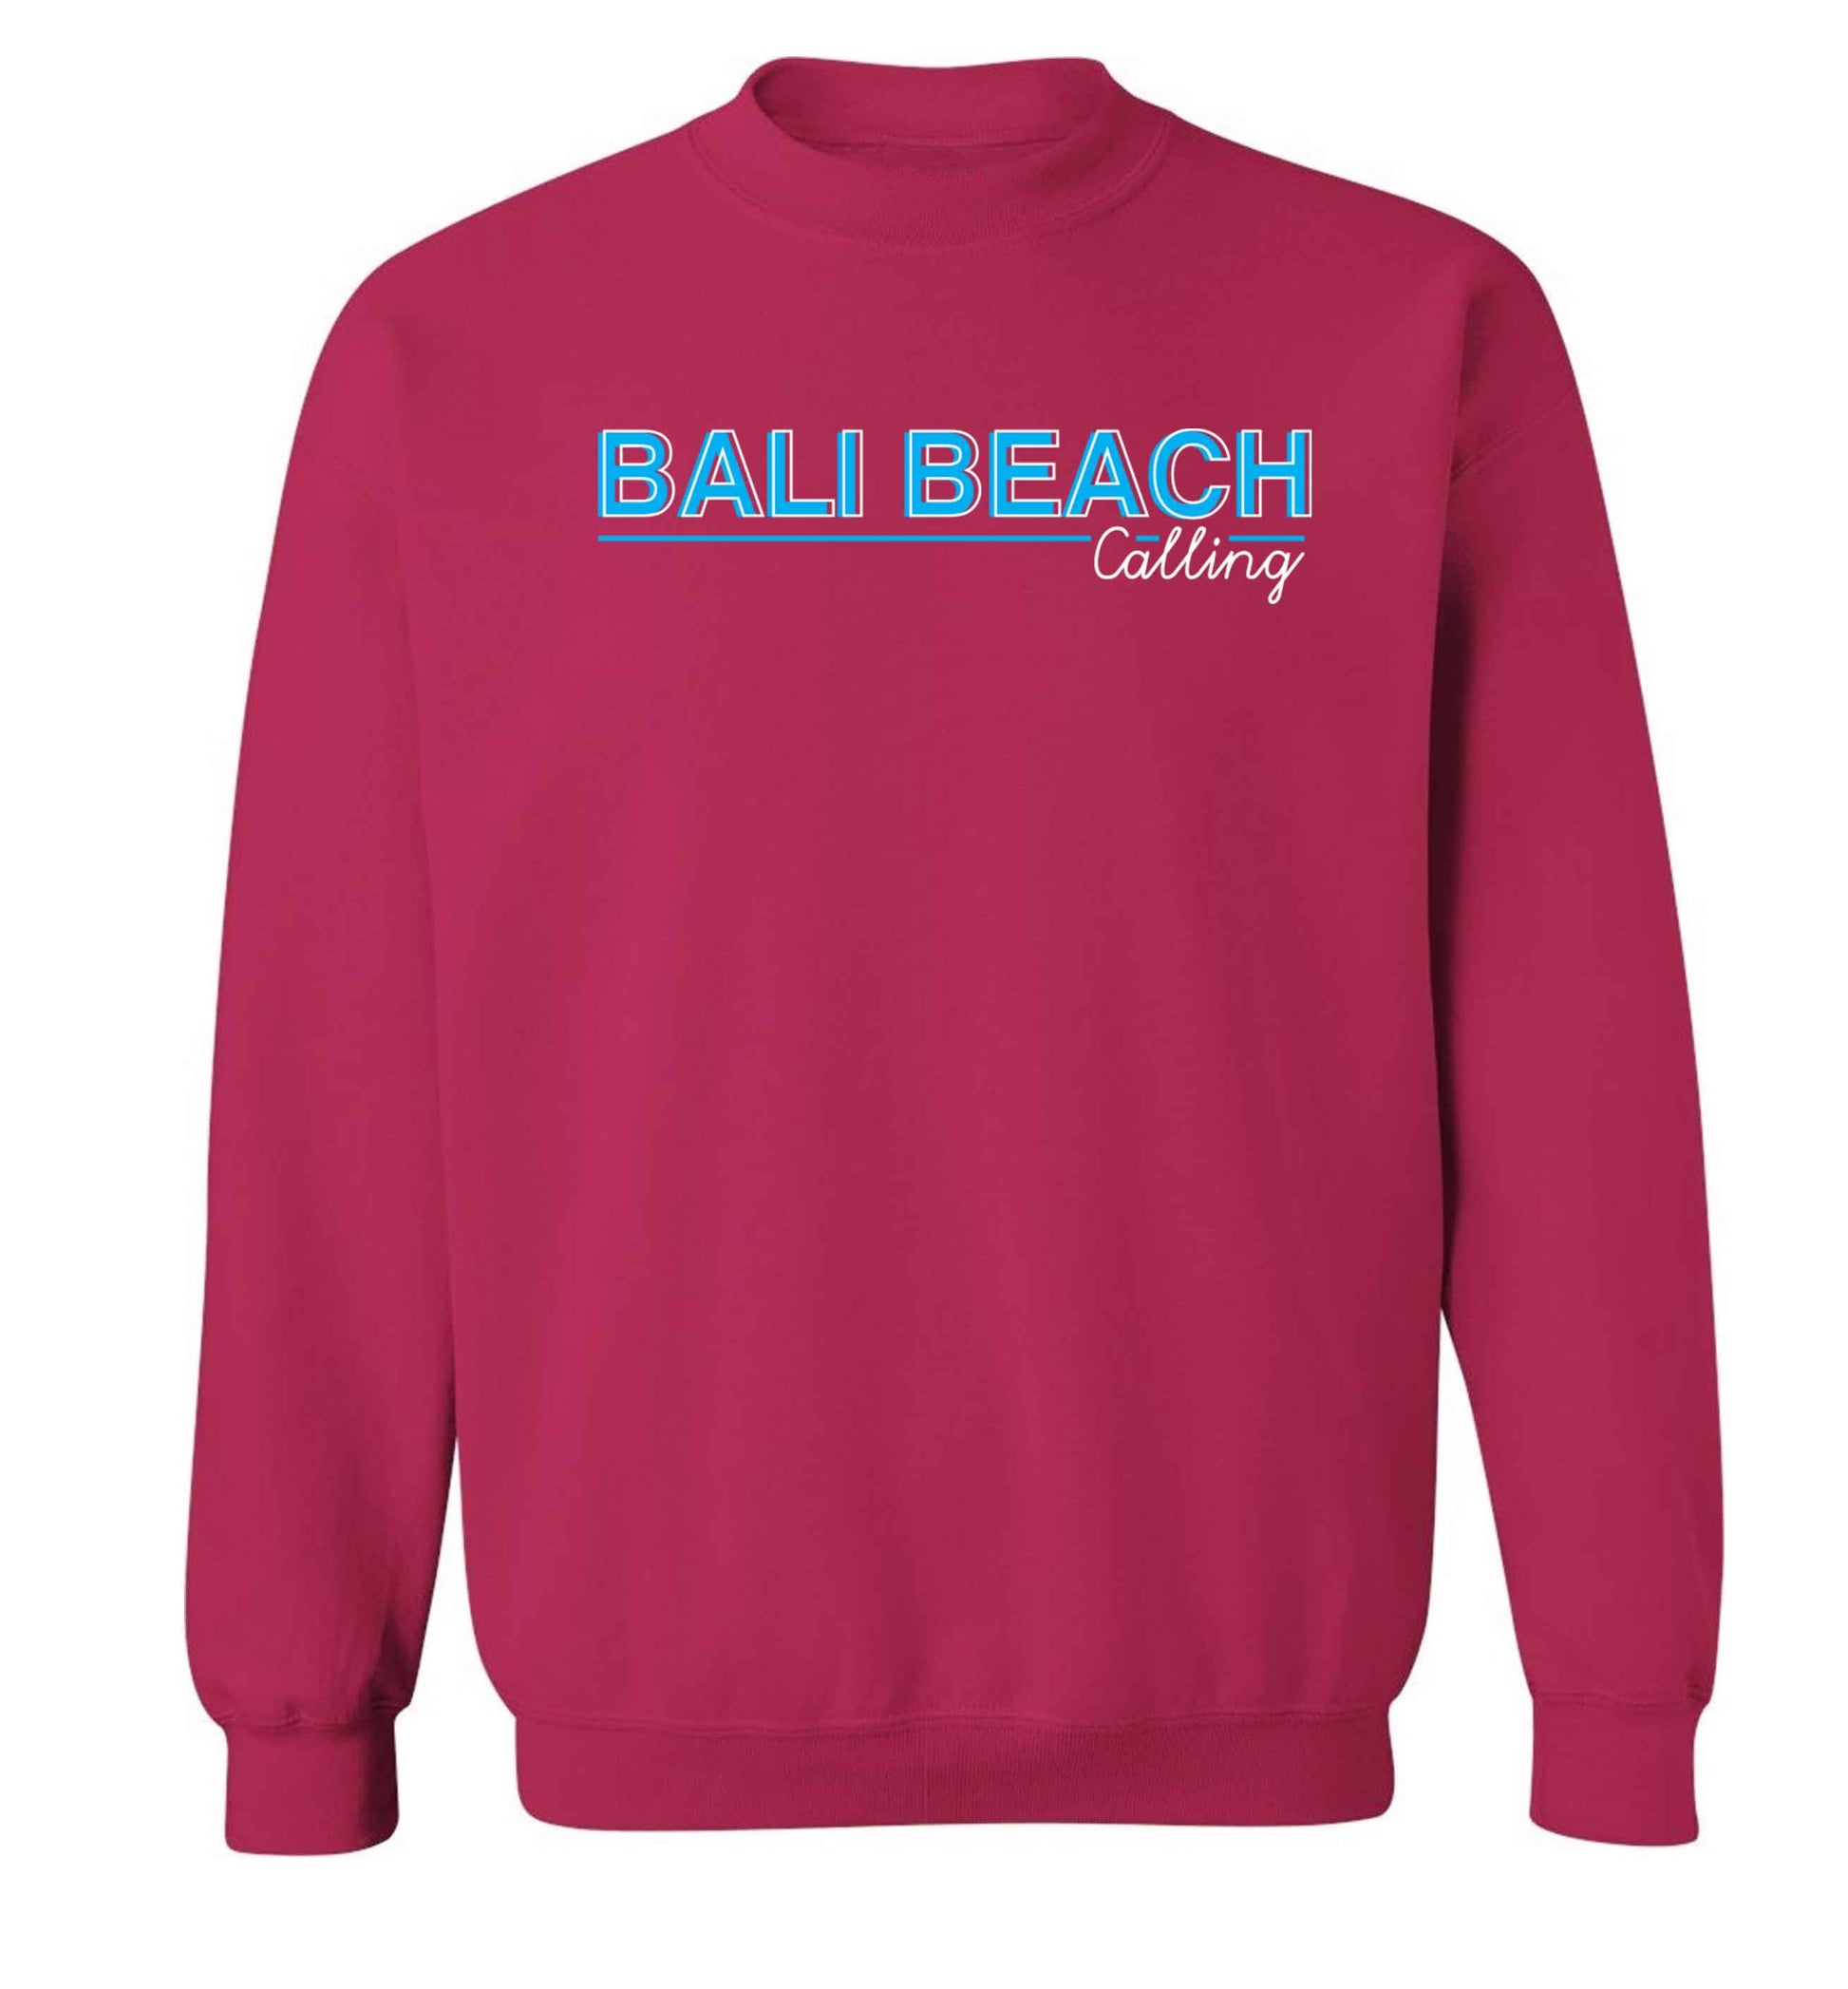 Bali beach calling Adult's unisex pink Sweater 2XL